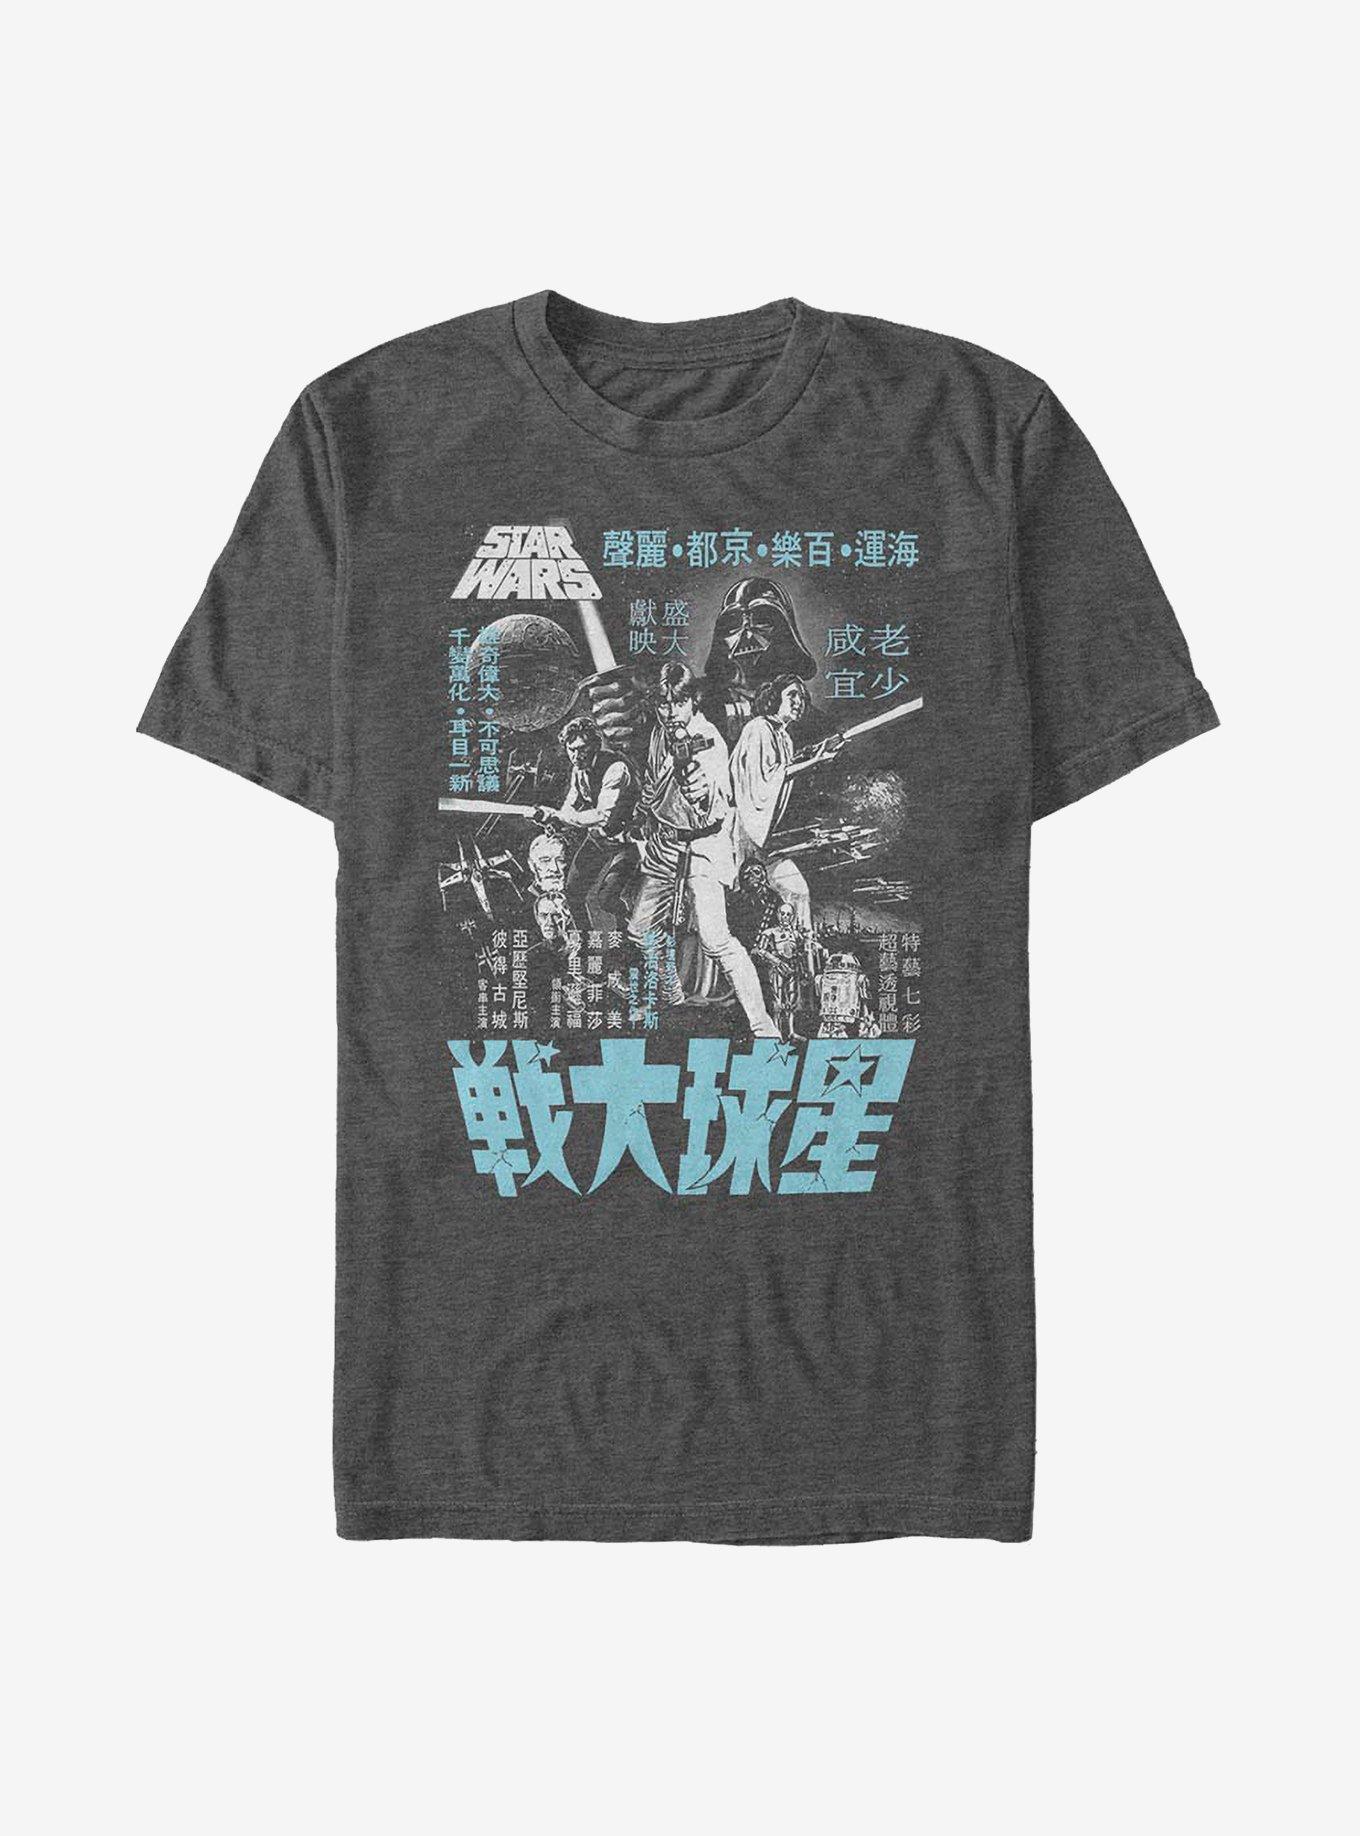 Star Wars Japanese Poster T-Shirt, CHAR HTR, hi-res